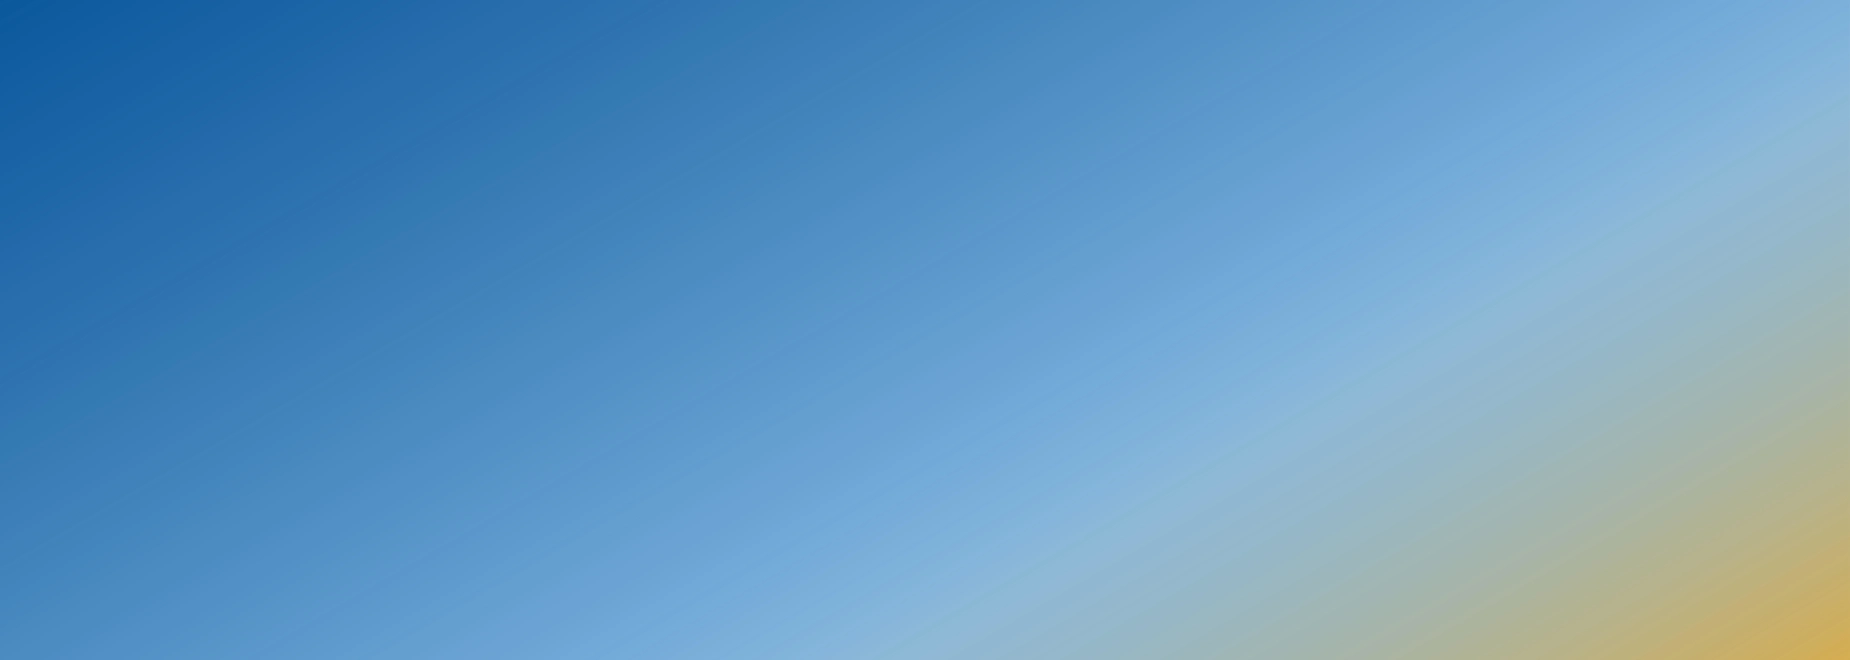 A blue gradient background